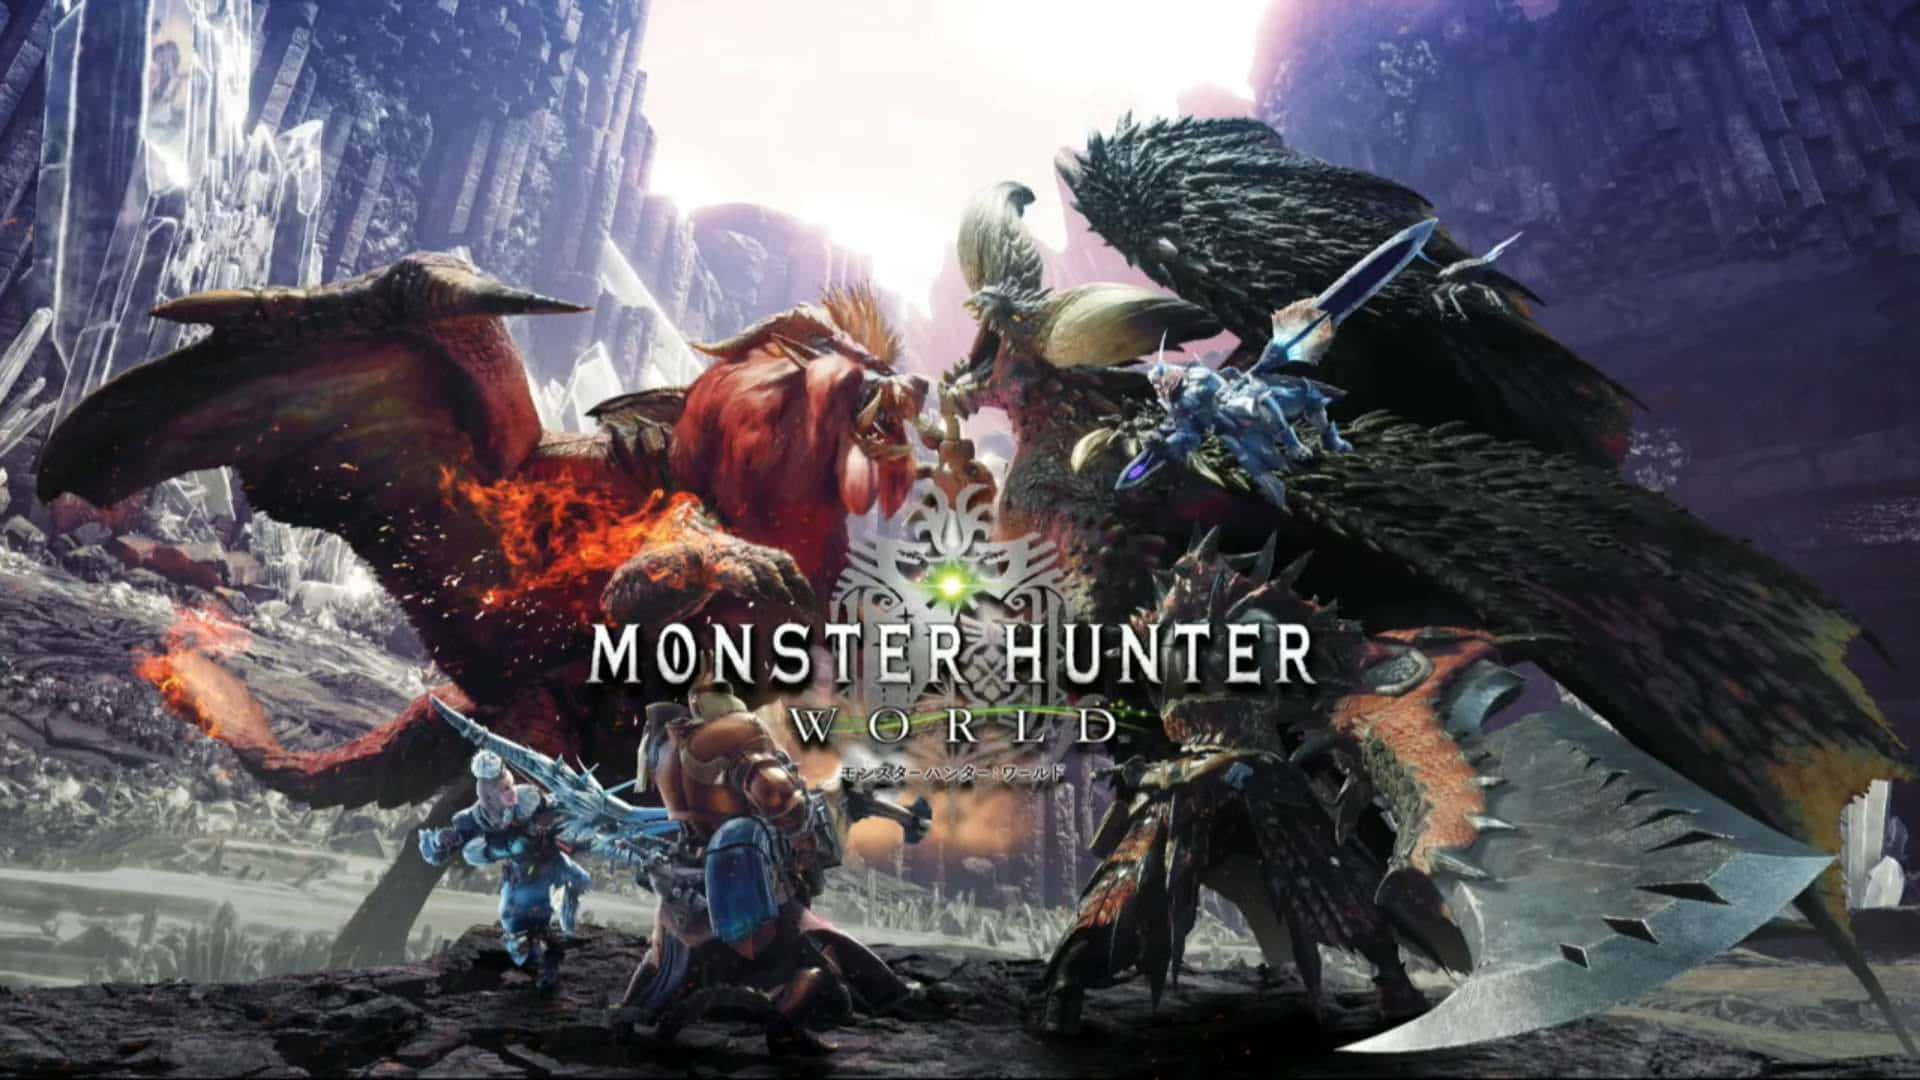 Monster Hunter World Pc Pc Pc Pc Pc Pc Pc Pc Pc Wallpaper